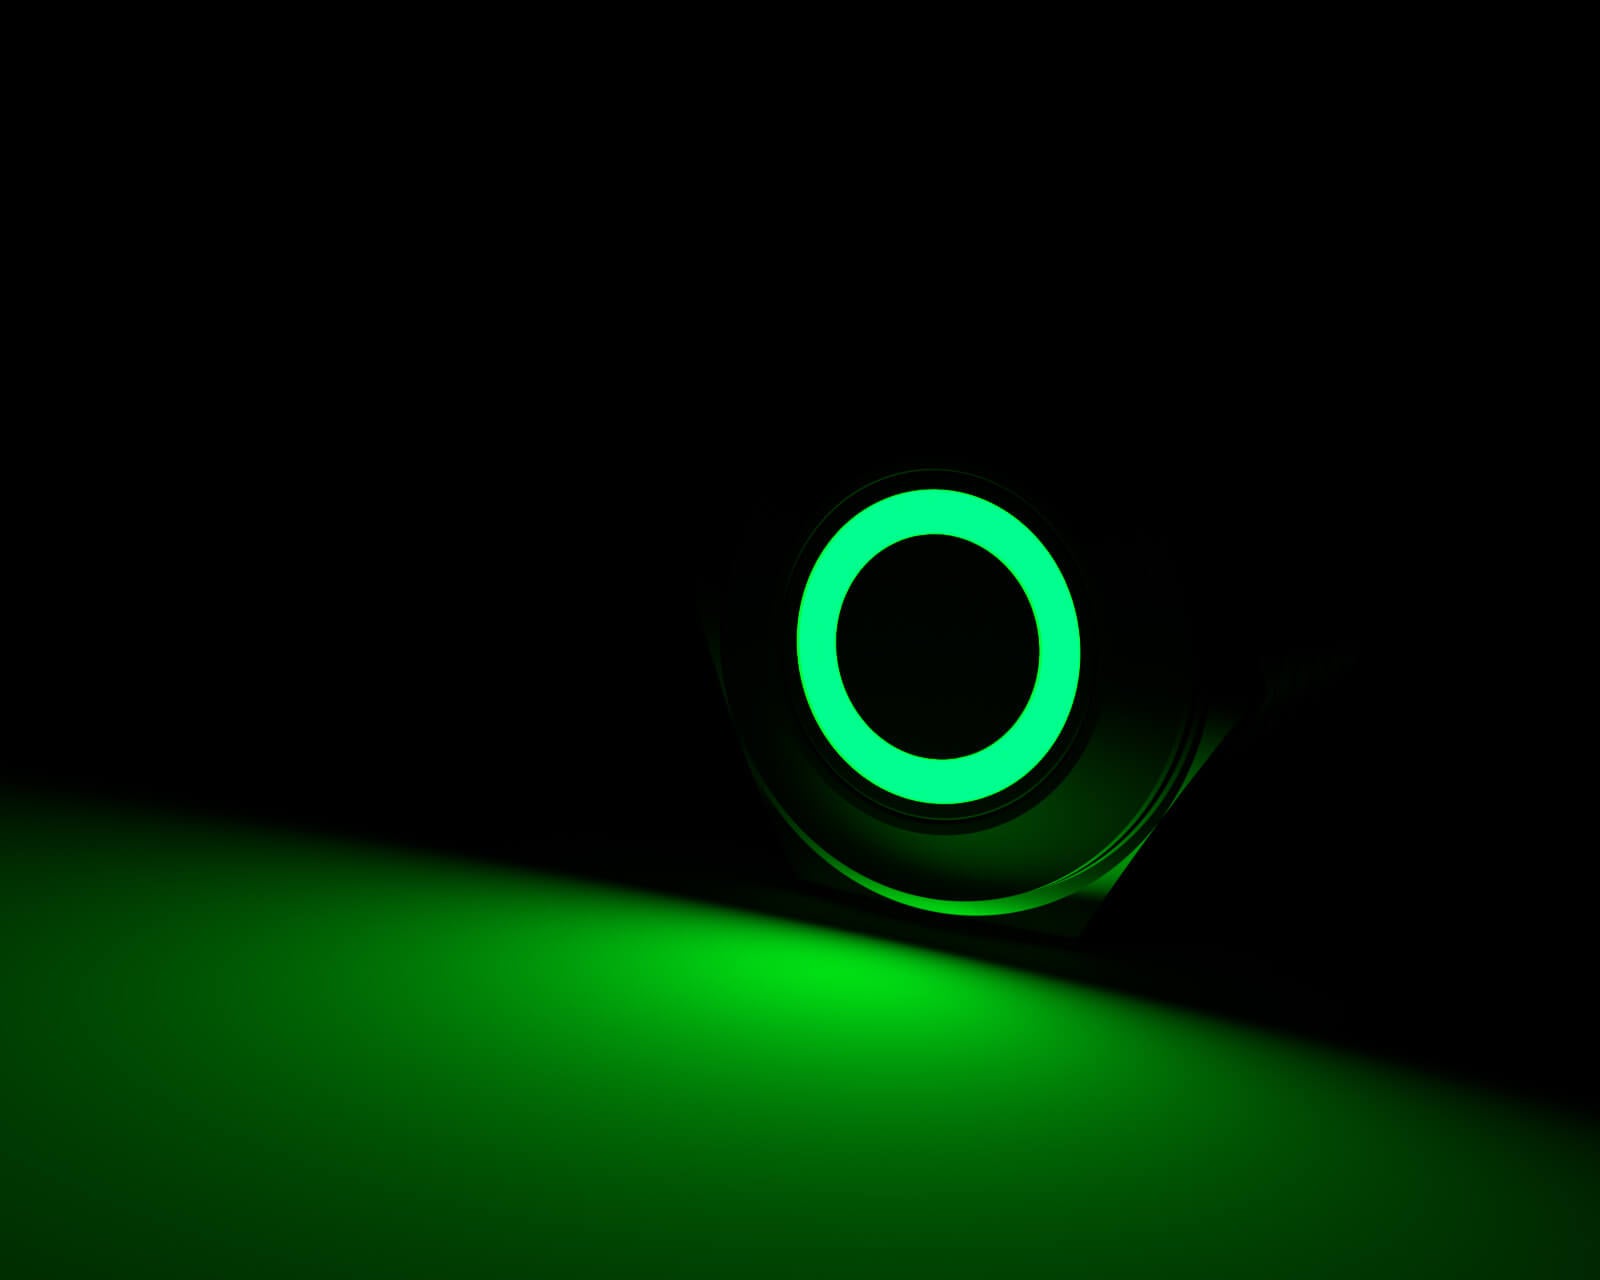 PrimoChill Silver Aluminum Momentary Vandal Switch -16mm - Ring Illumination - Green LED - Green LED Ring